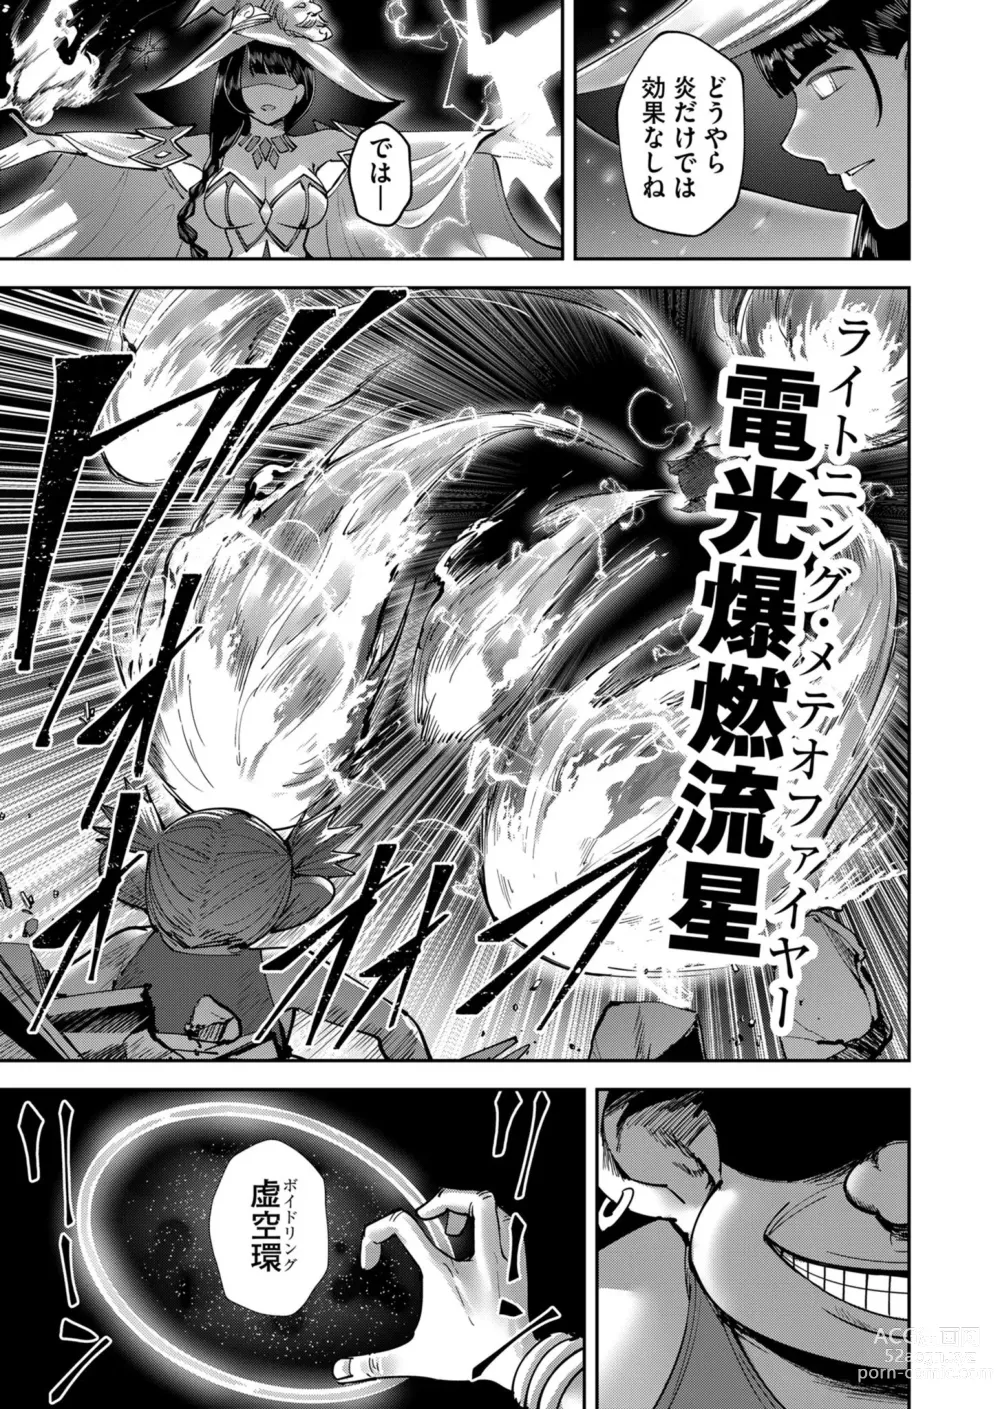 Page 155 of manga Kichiku Eiyuu Vol.04